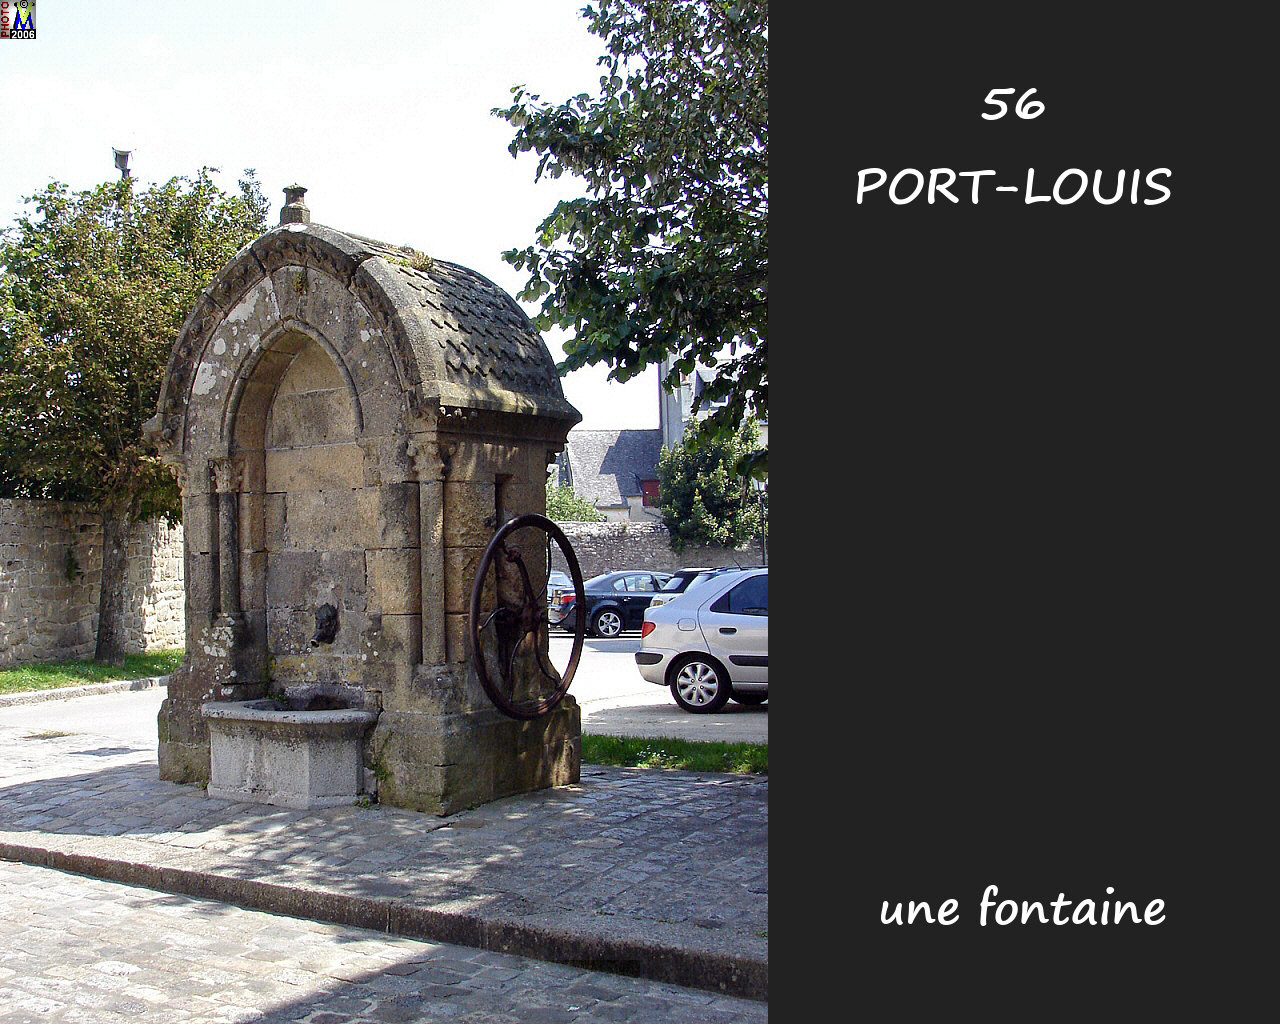 56PORT-LOUIS_fontaine_100.jpg